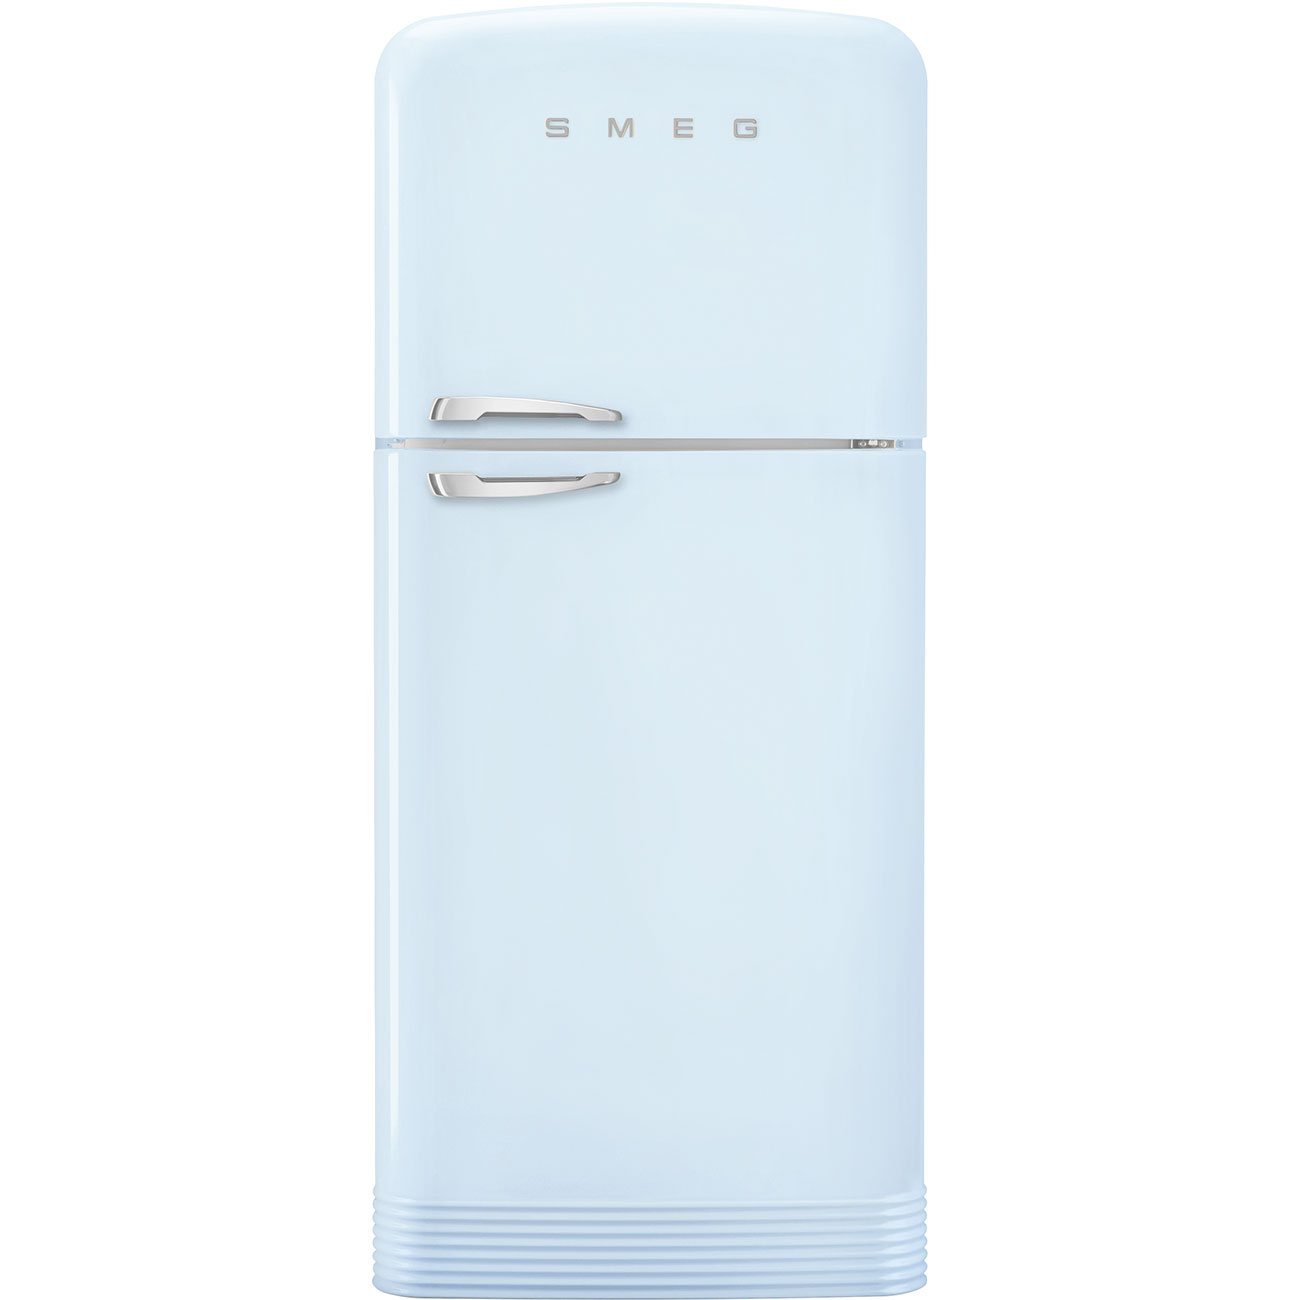 Pastelblauw koelkast - Smeg_1